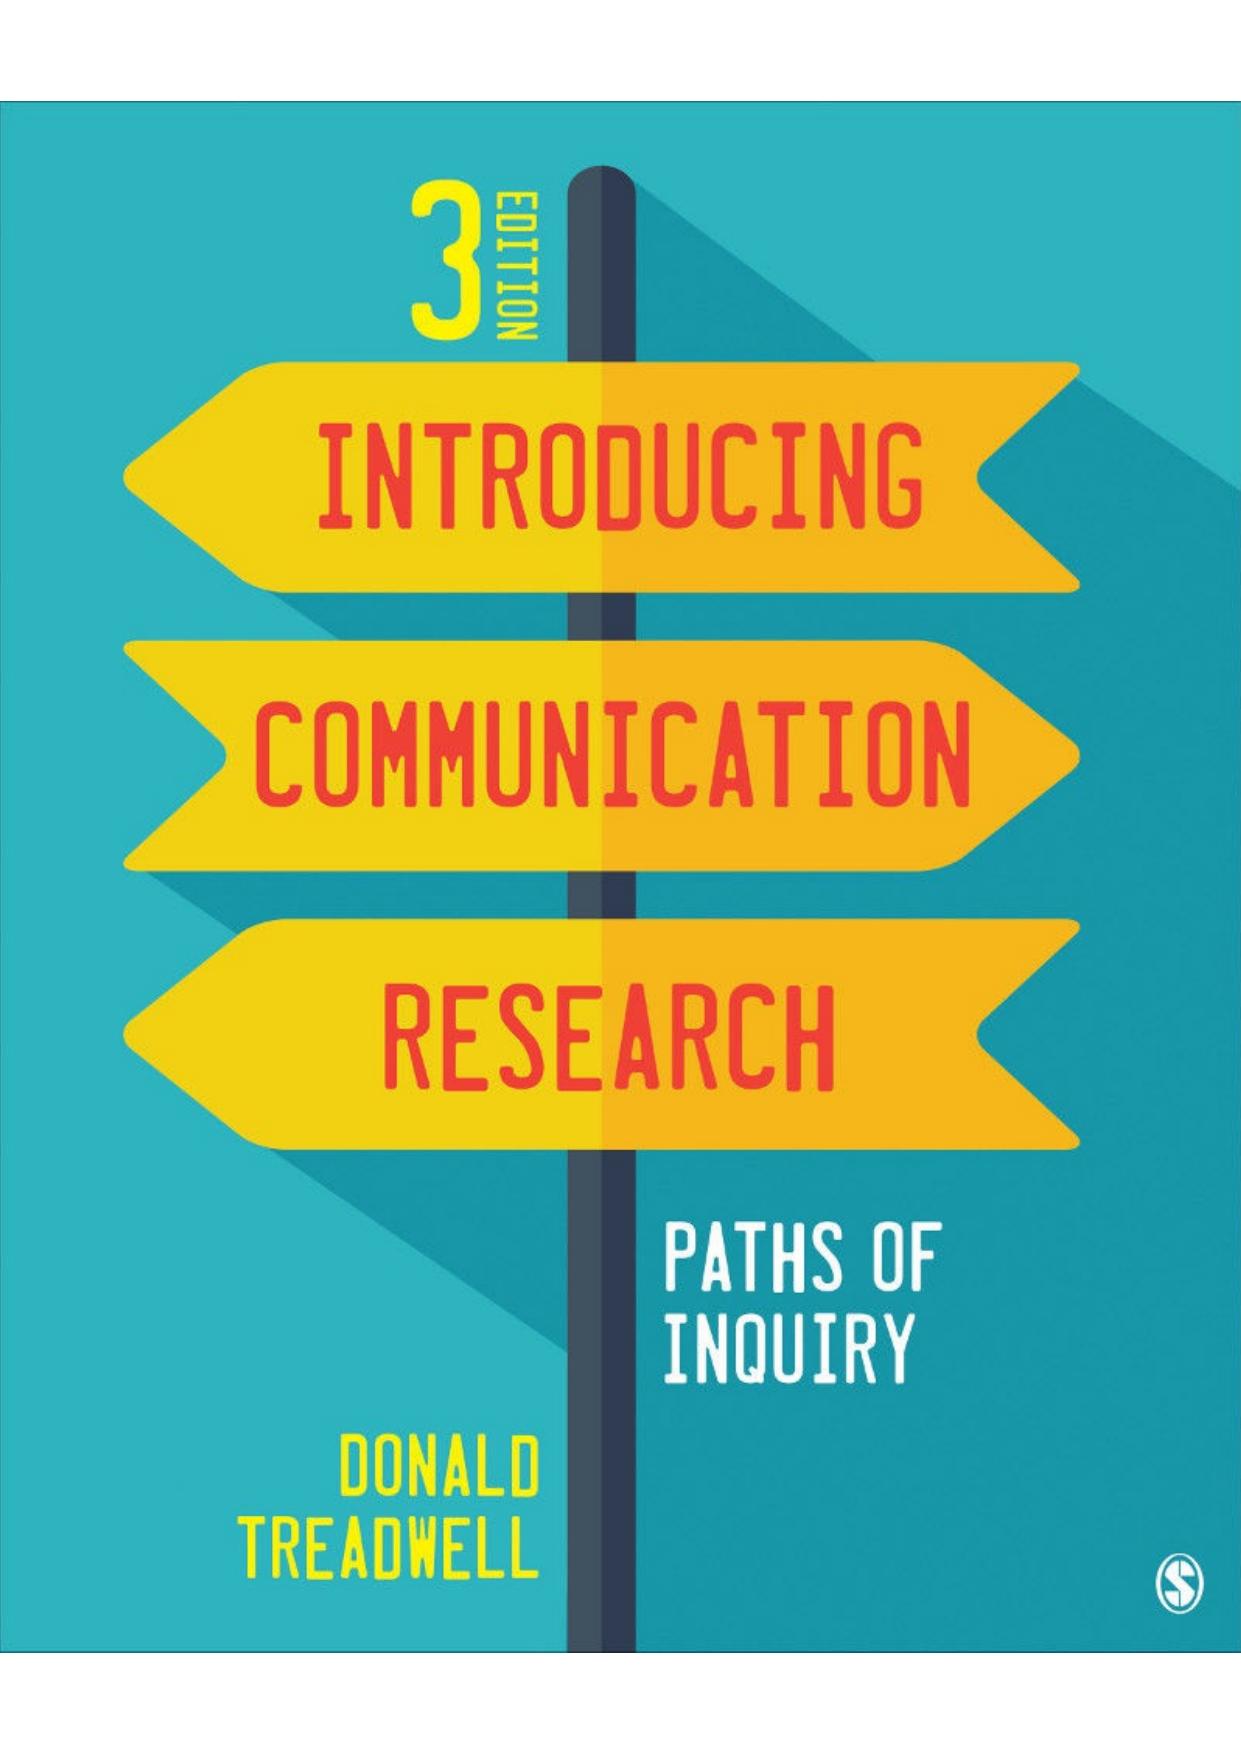 Introducing Communication Resea - Donald F. Treadwell - Donald F. Treadwell.jpg